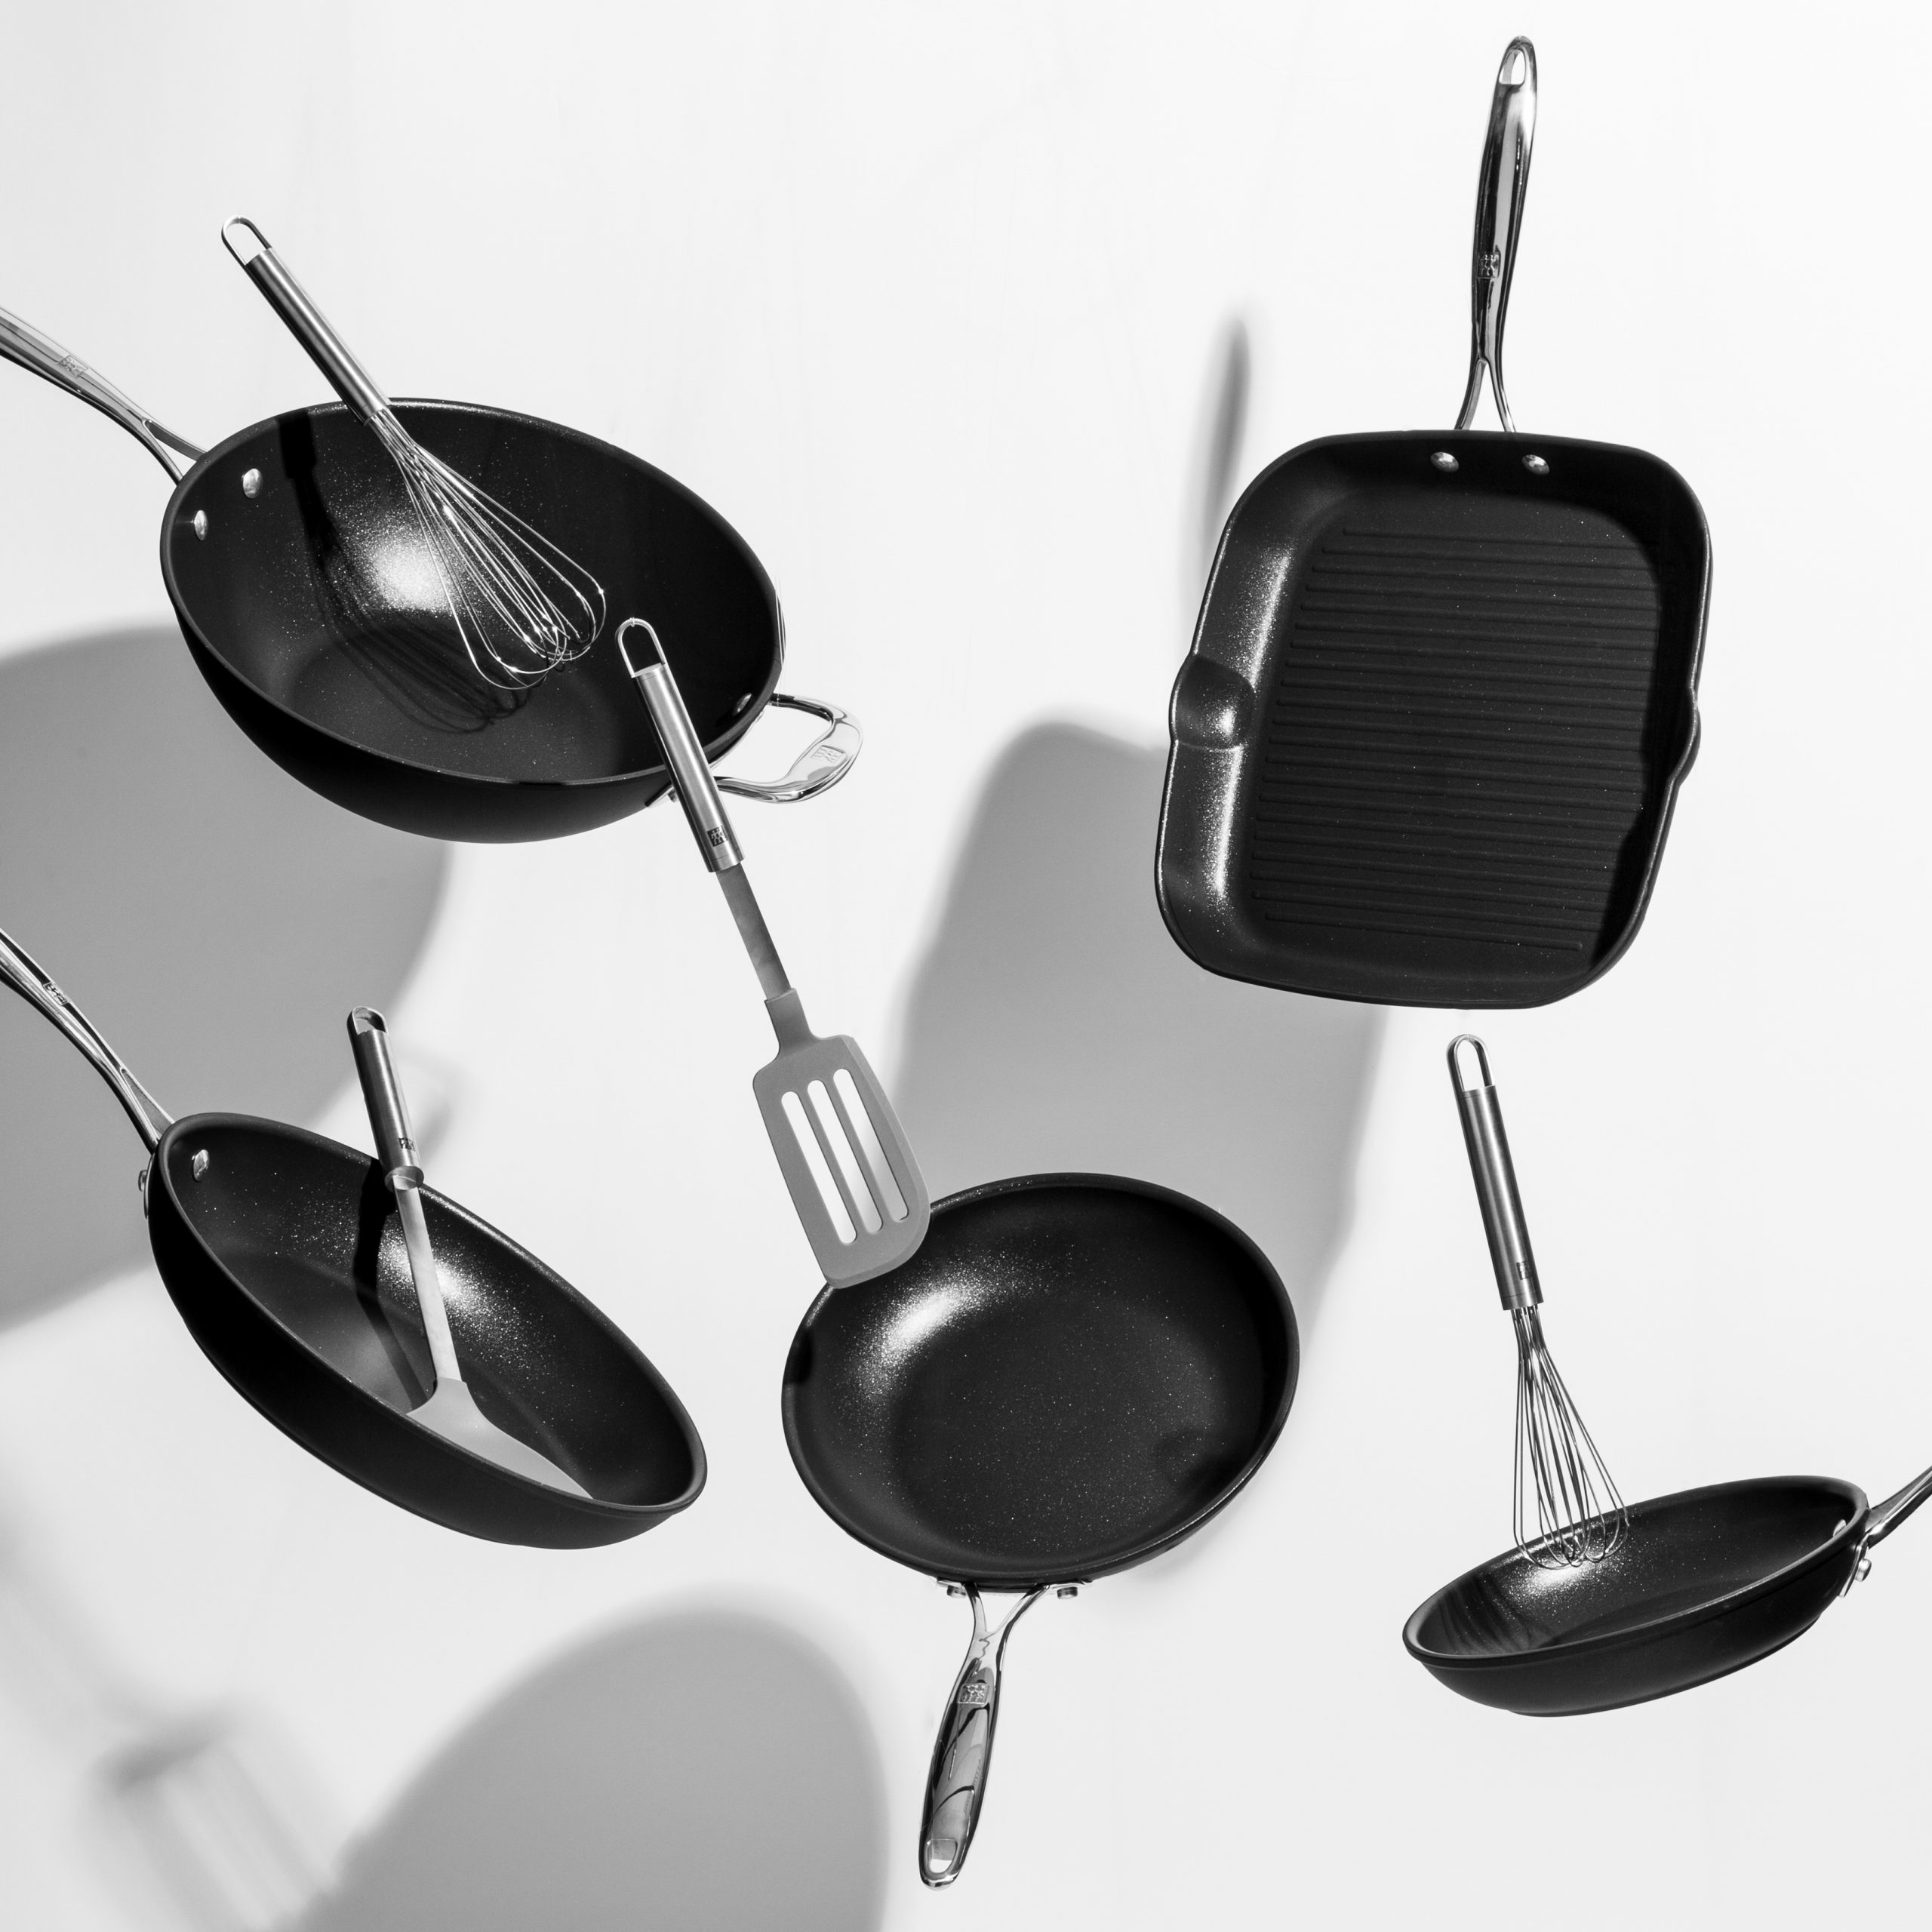 Interesting shot of trendy black kitchen utensils dancing on white background